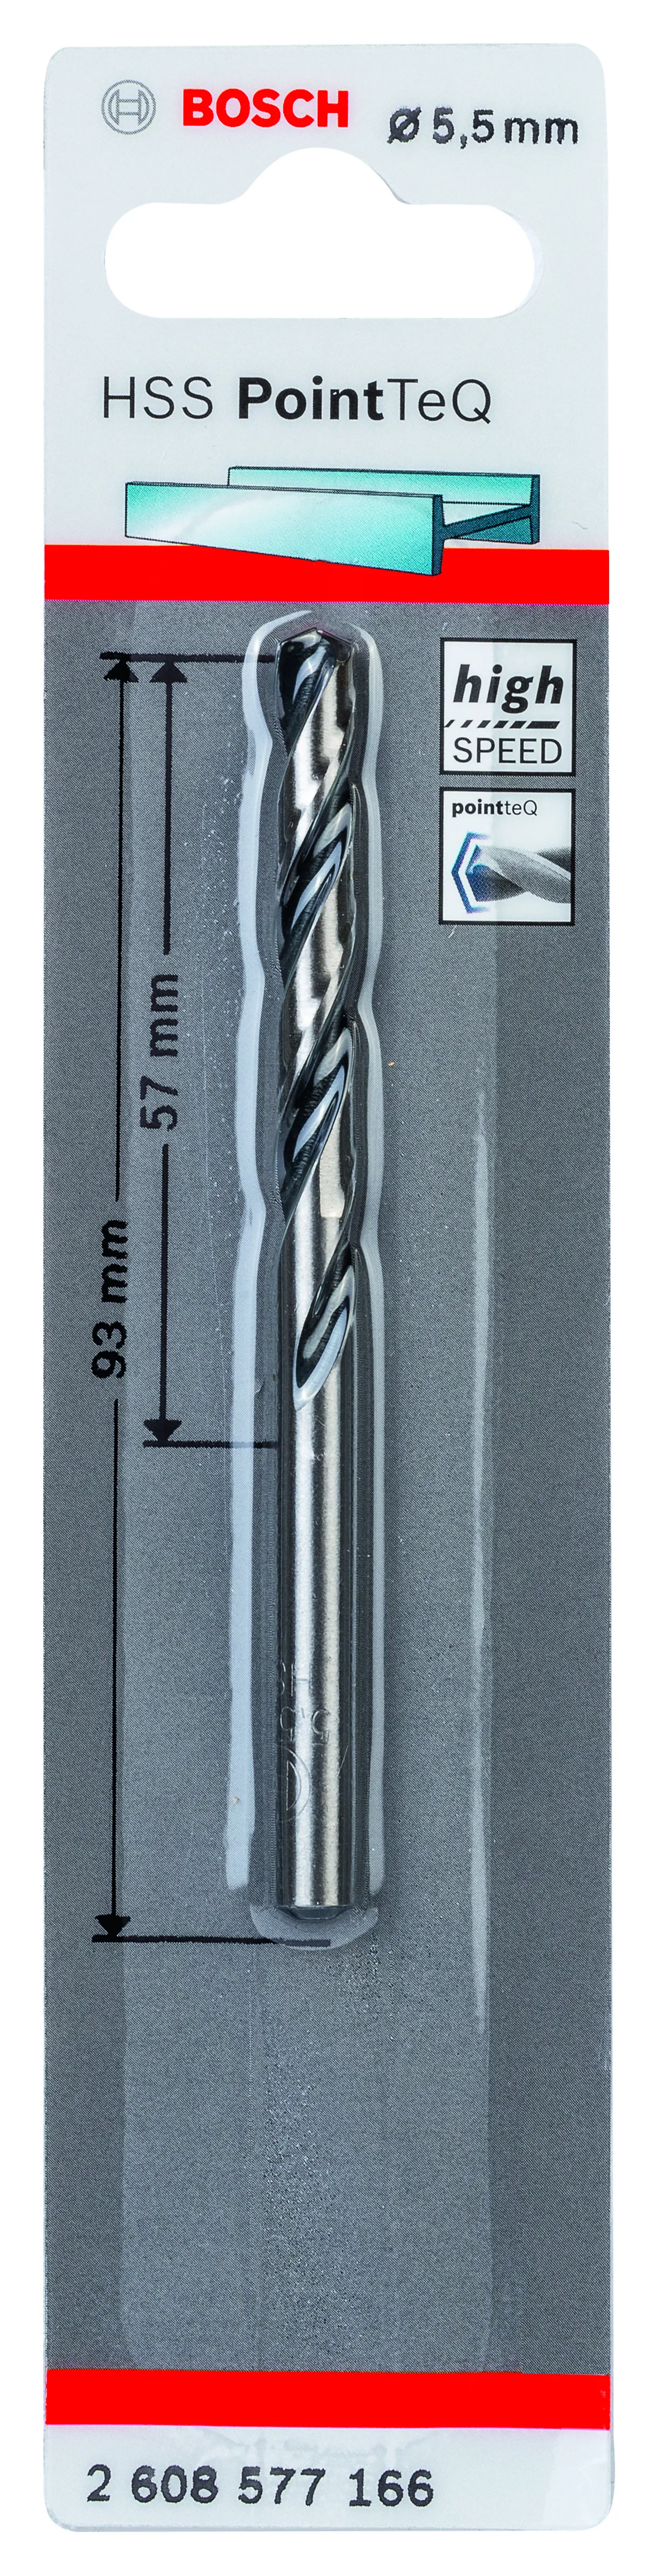 Metallbor pointtec hss-r 6,0mm bosch   n40